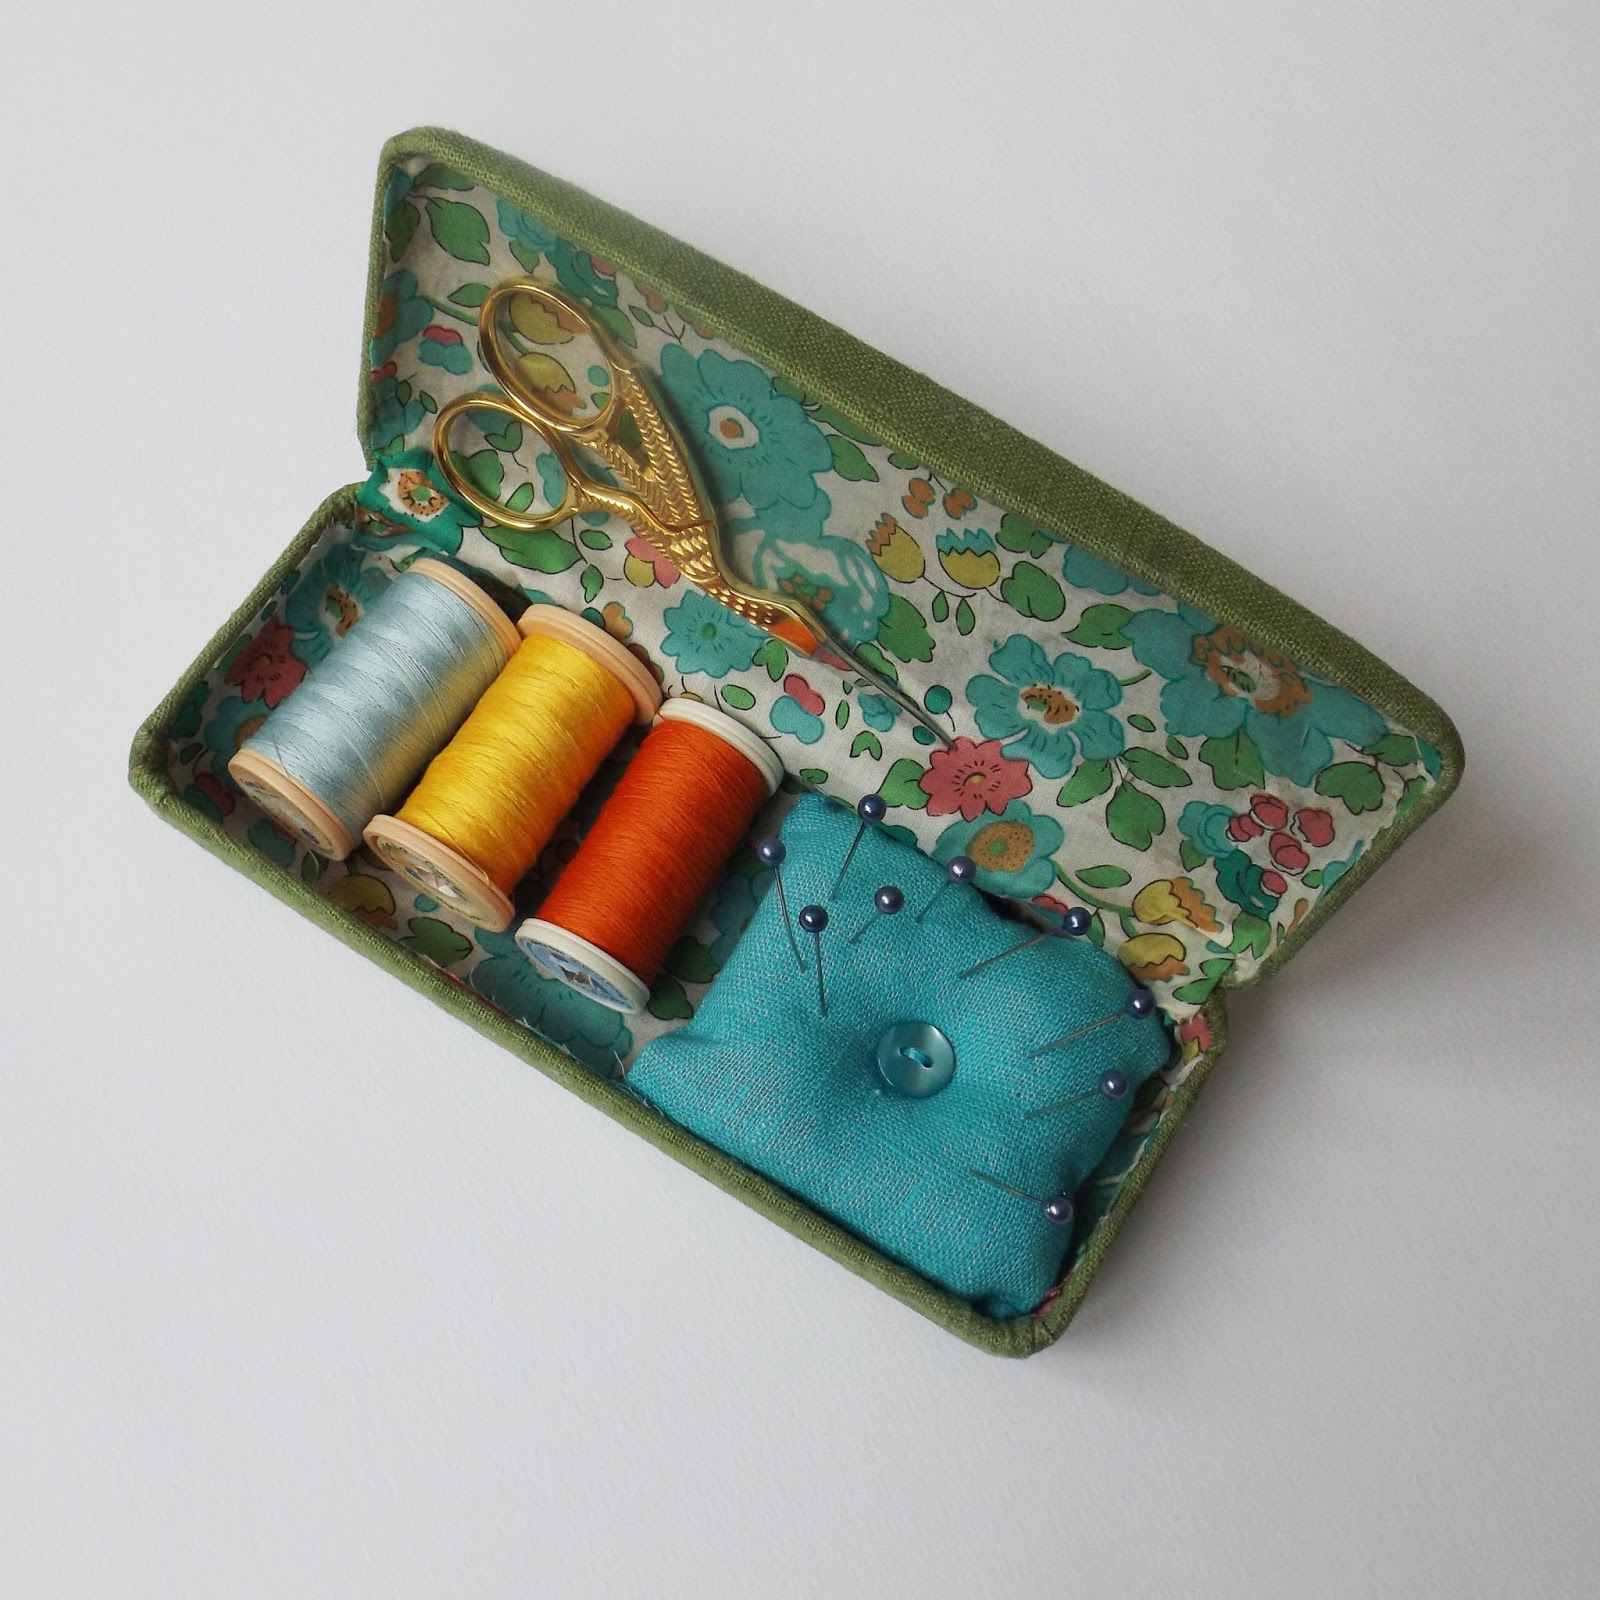 jemima schlee: glasses case sewing kit